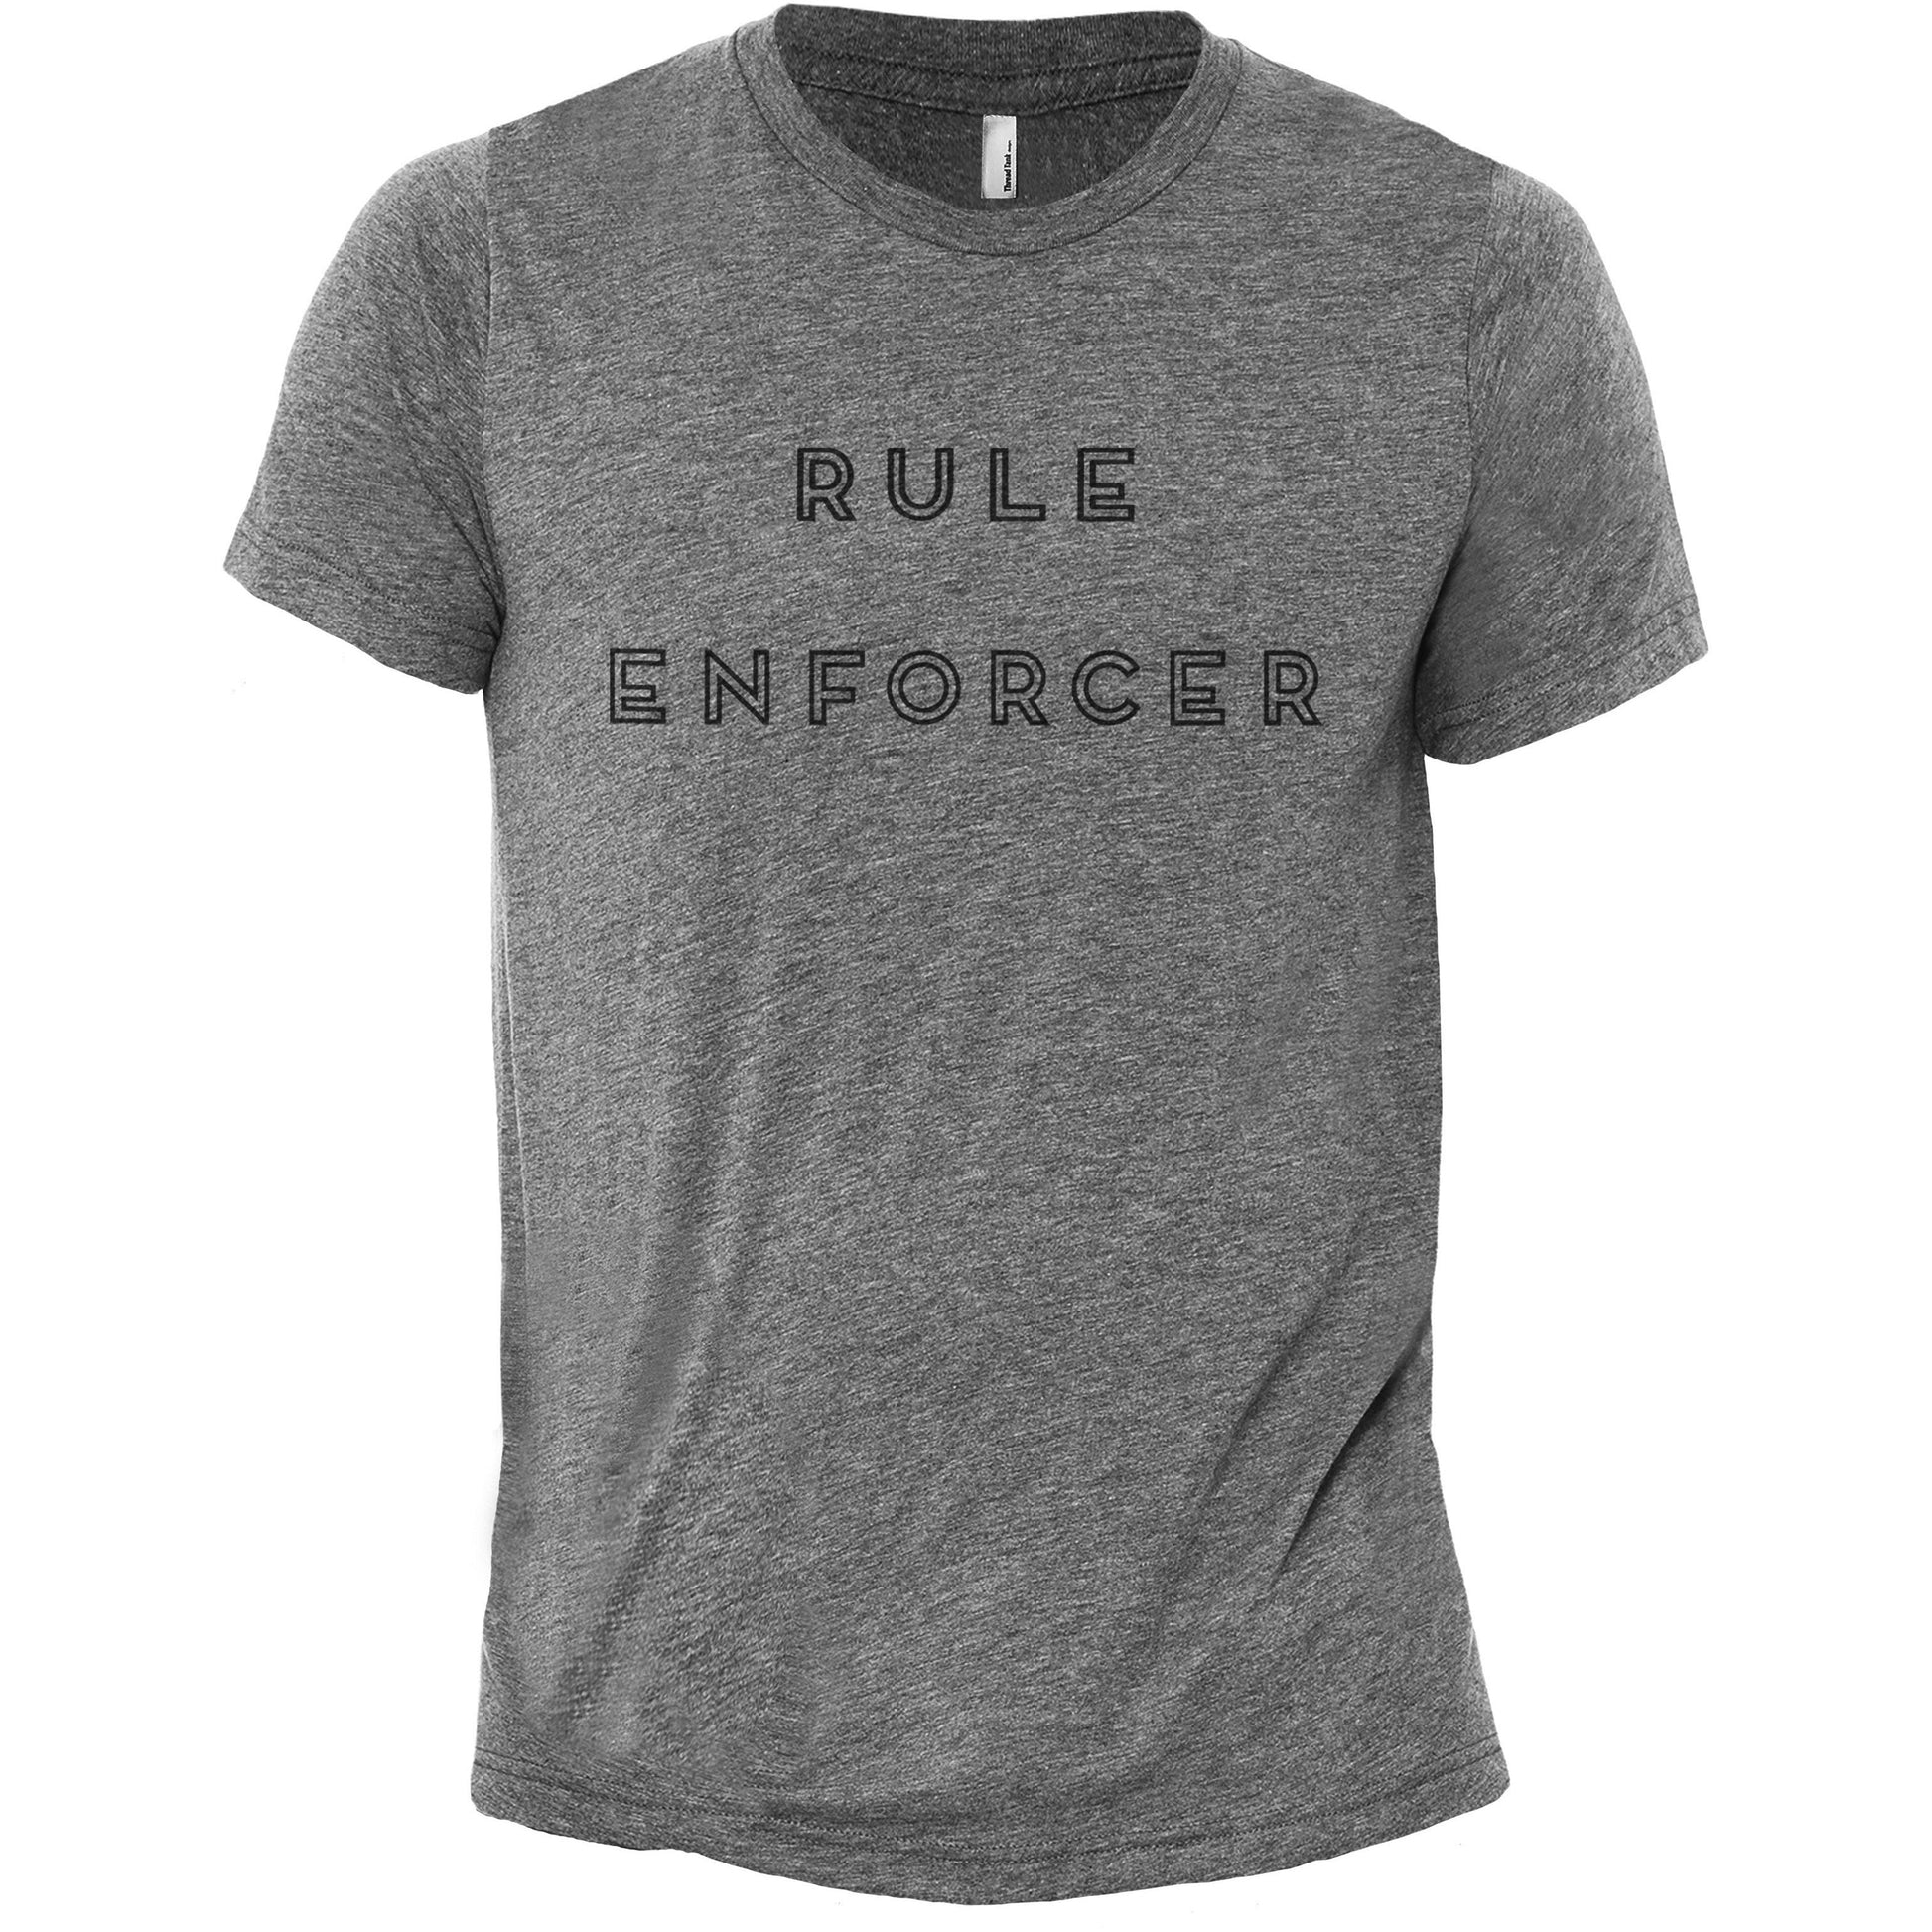 Rule Enforcer - Stories You Can Wear